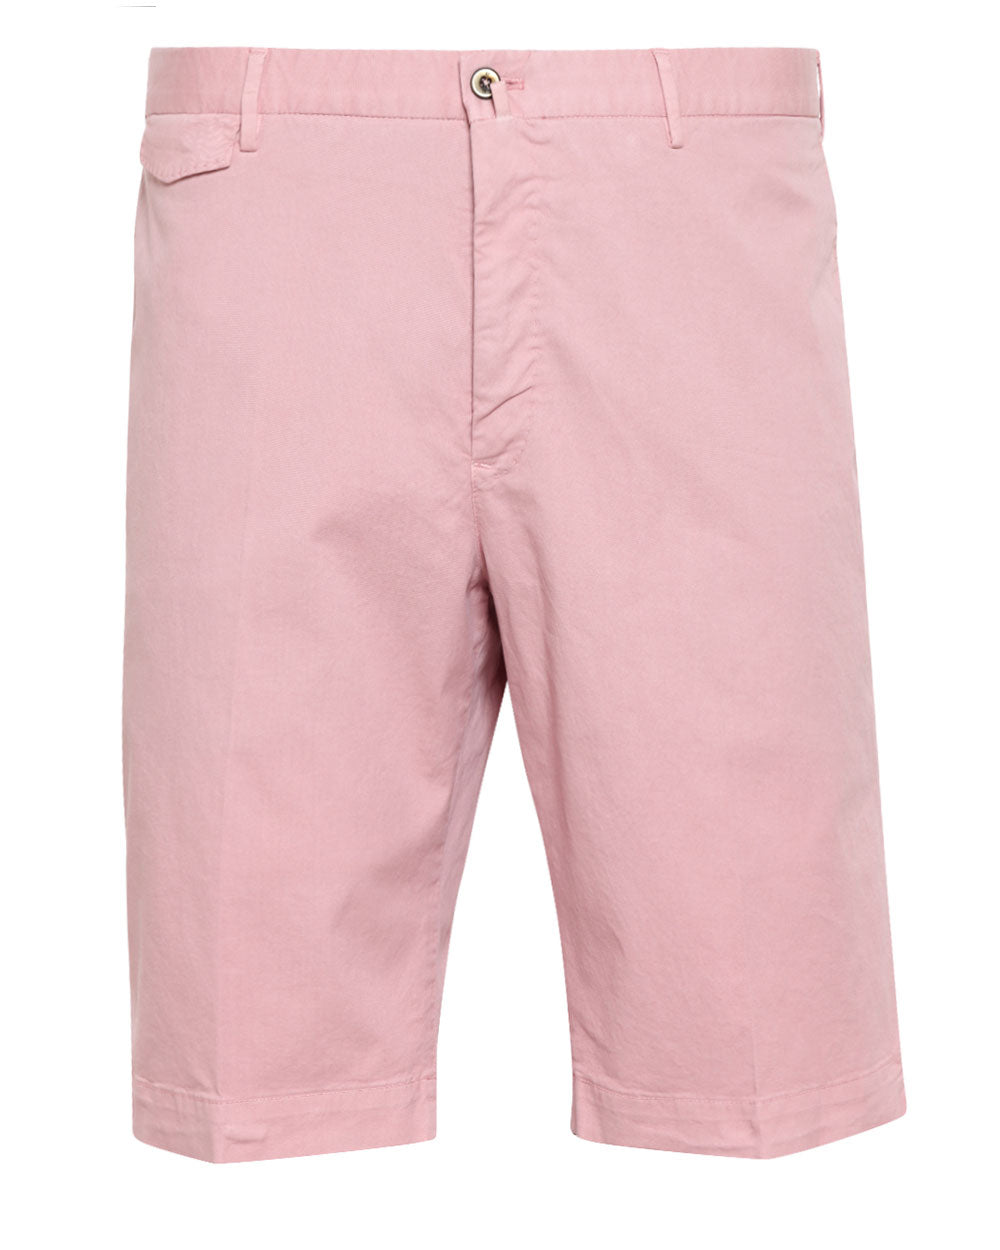 Soft Pink Cotton Blend Stretch Bermuda Short